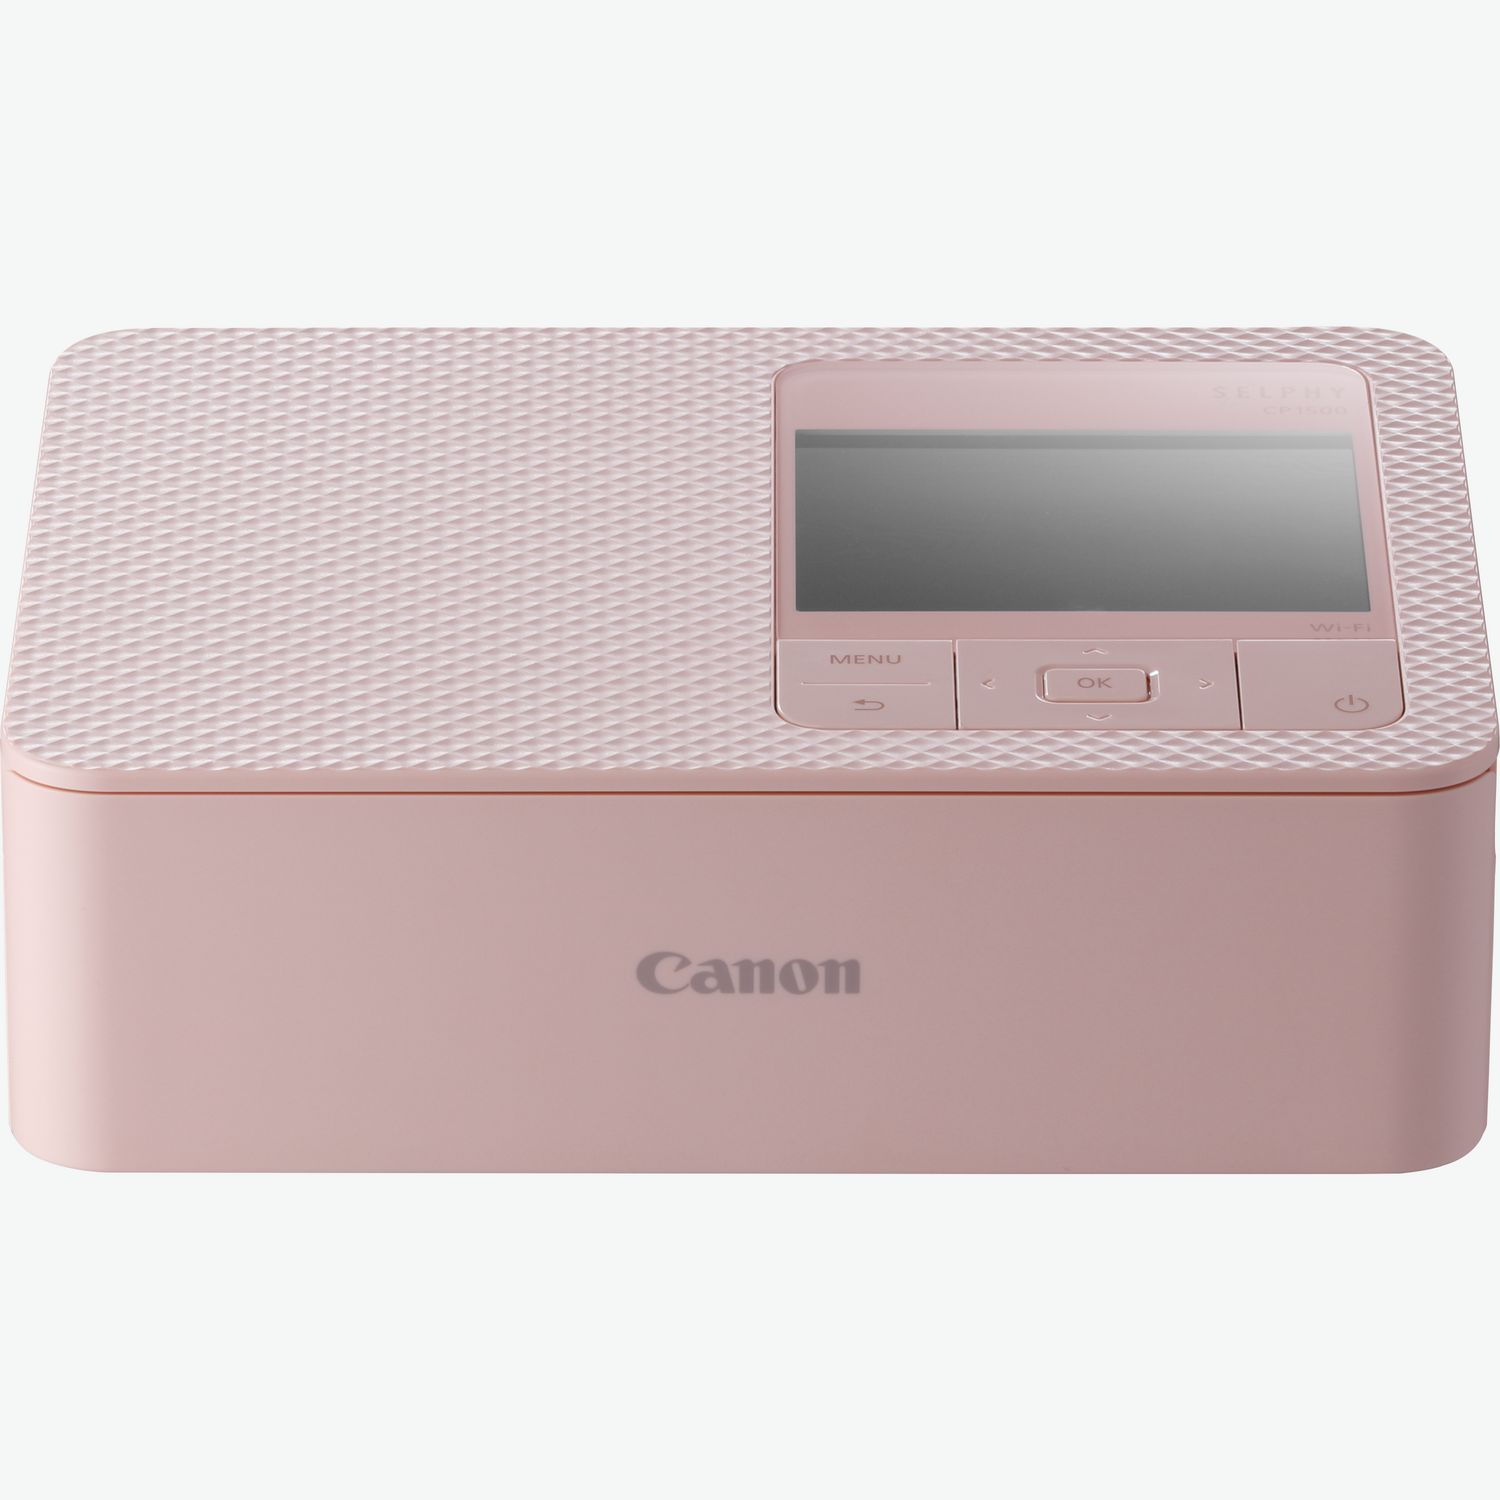 Canon Zoemini portable printer | O' Leary's Camera World | Shop Online